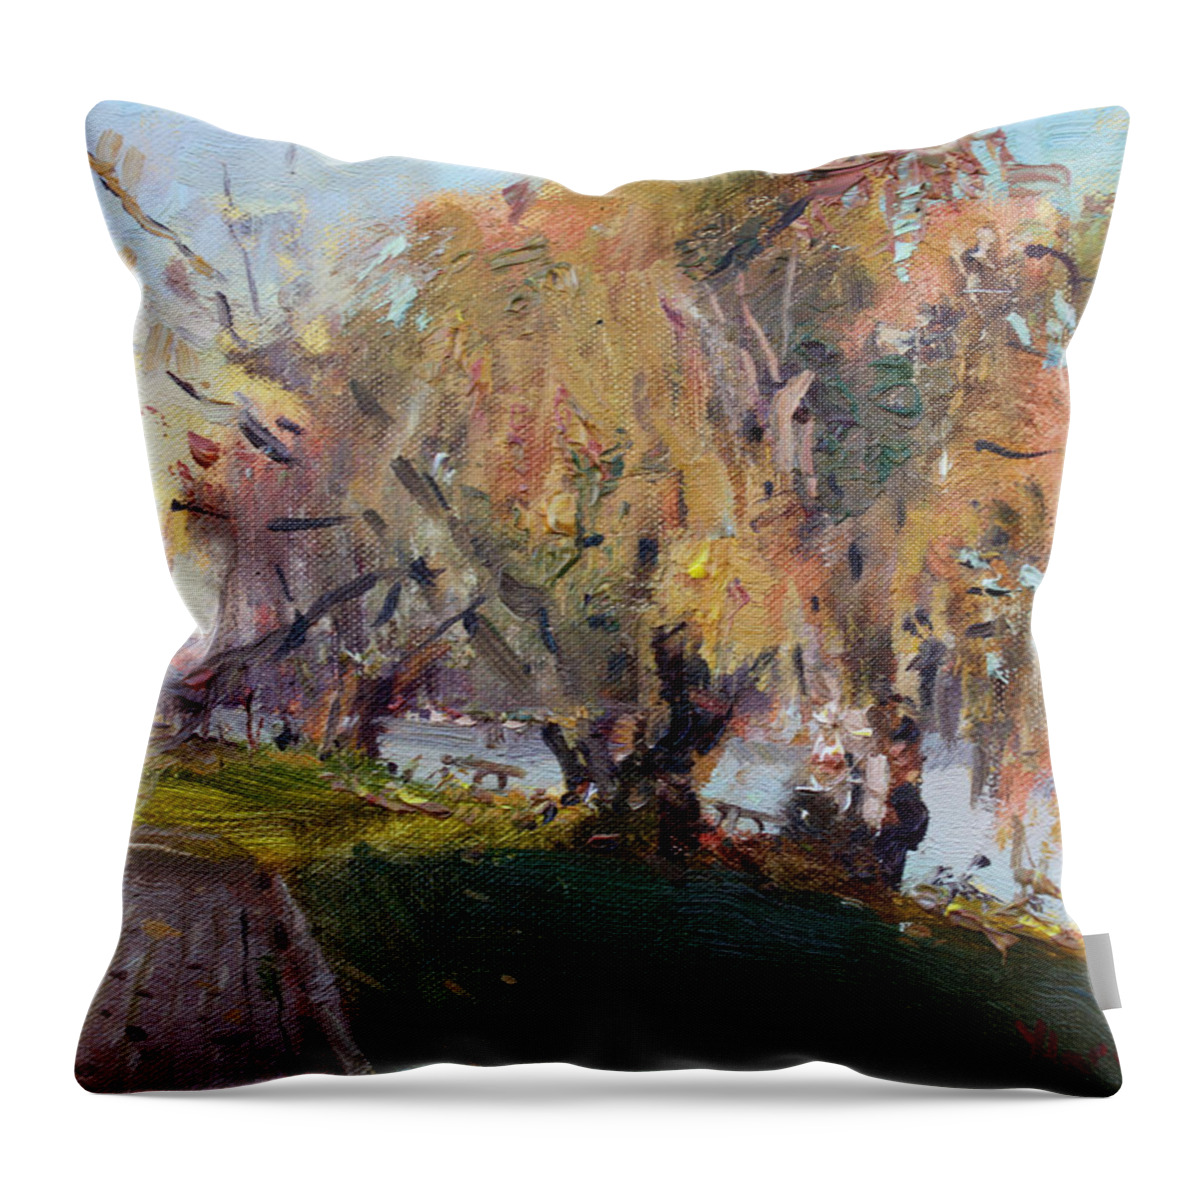 Autumn Chautauqua Lake Throw Pillow featuring the painting Autumn at Chautauqua Lake by Ylli Haruni